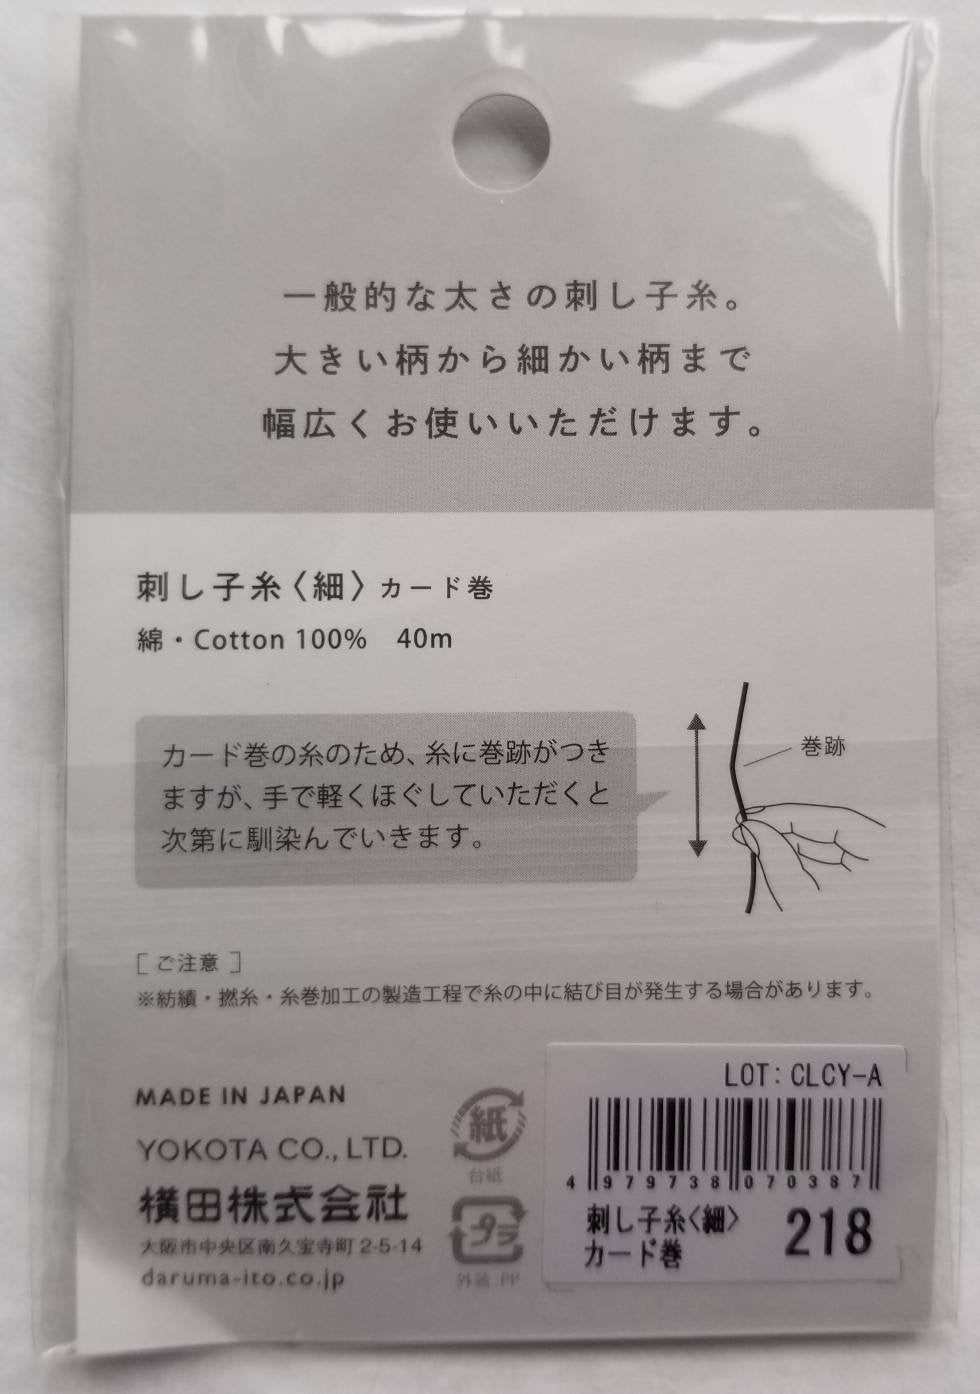 Daruma #218 DARK BROWN Japanese Cotton SASHIKO thread 40 meter card 20/4 こげ茶 dark brown